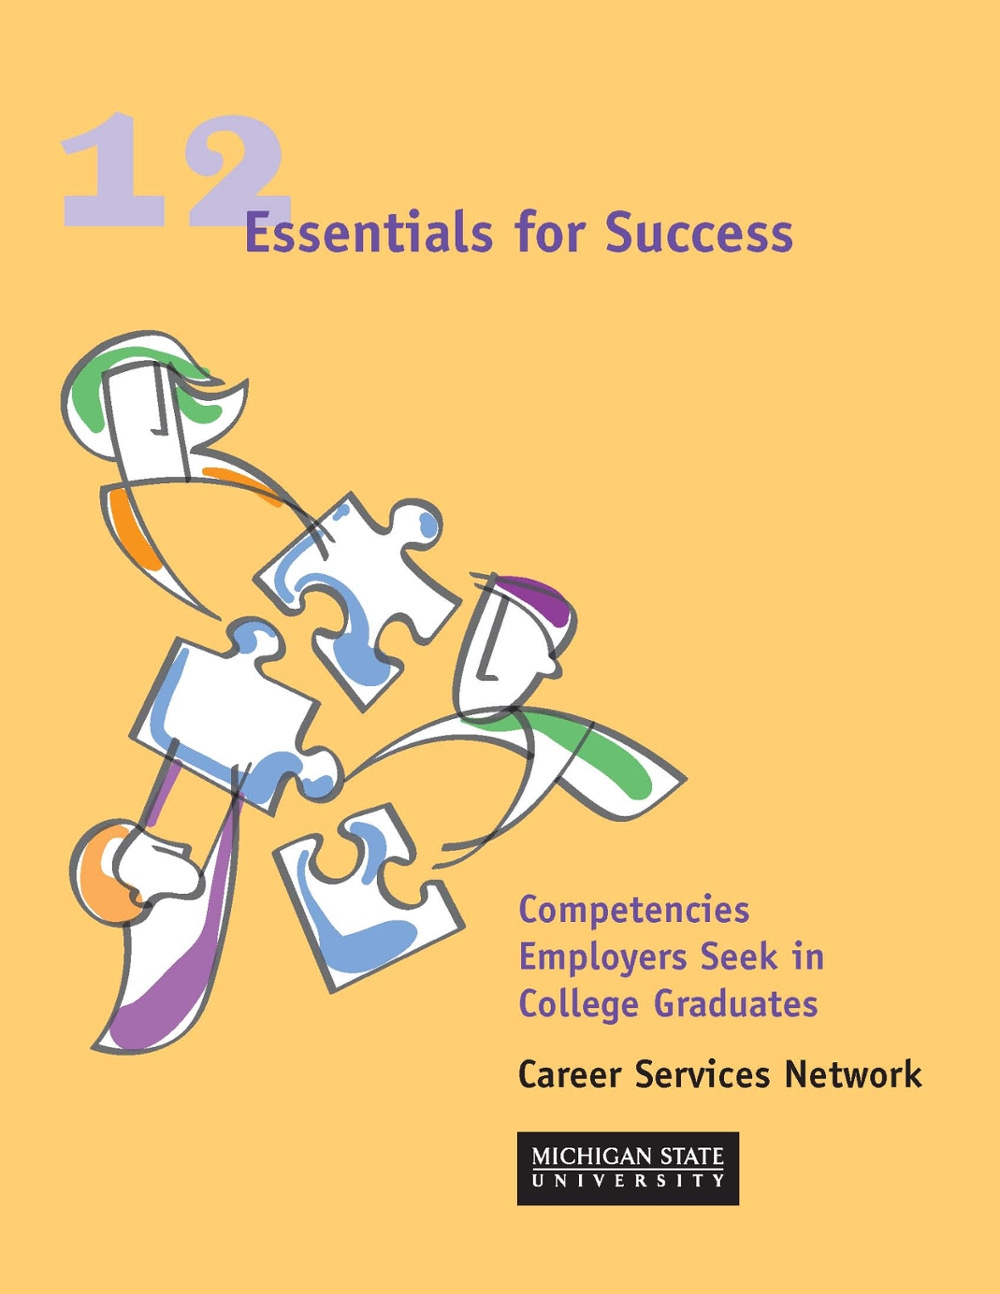 12 Essentials for Success guide cover